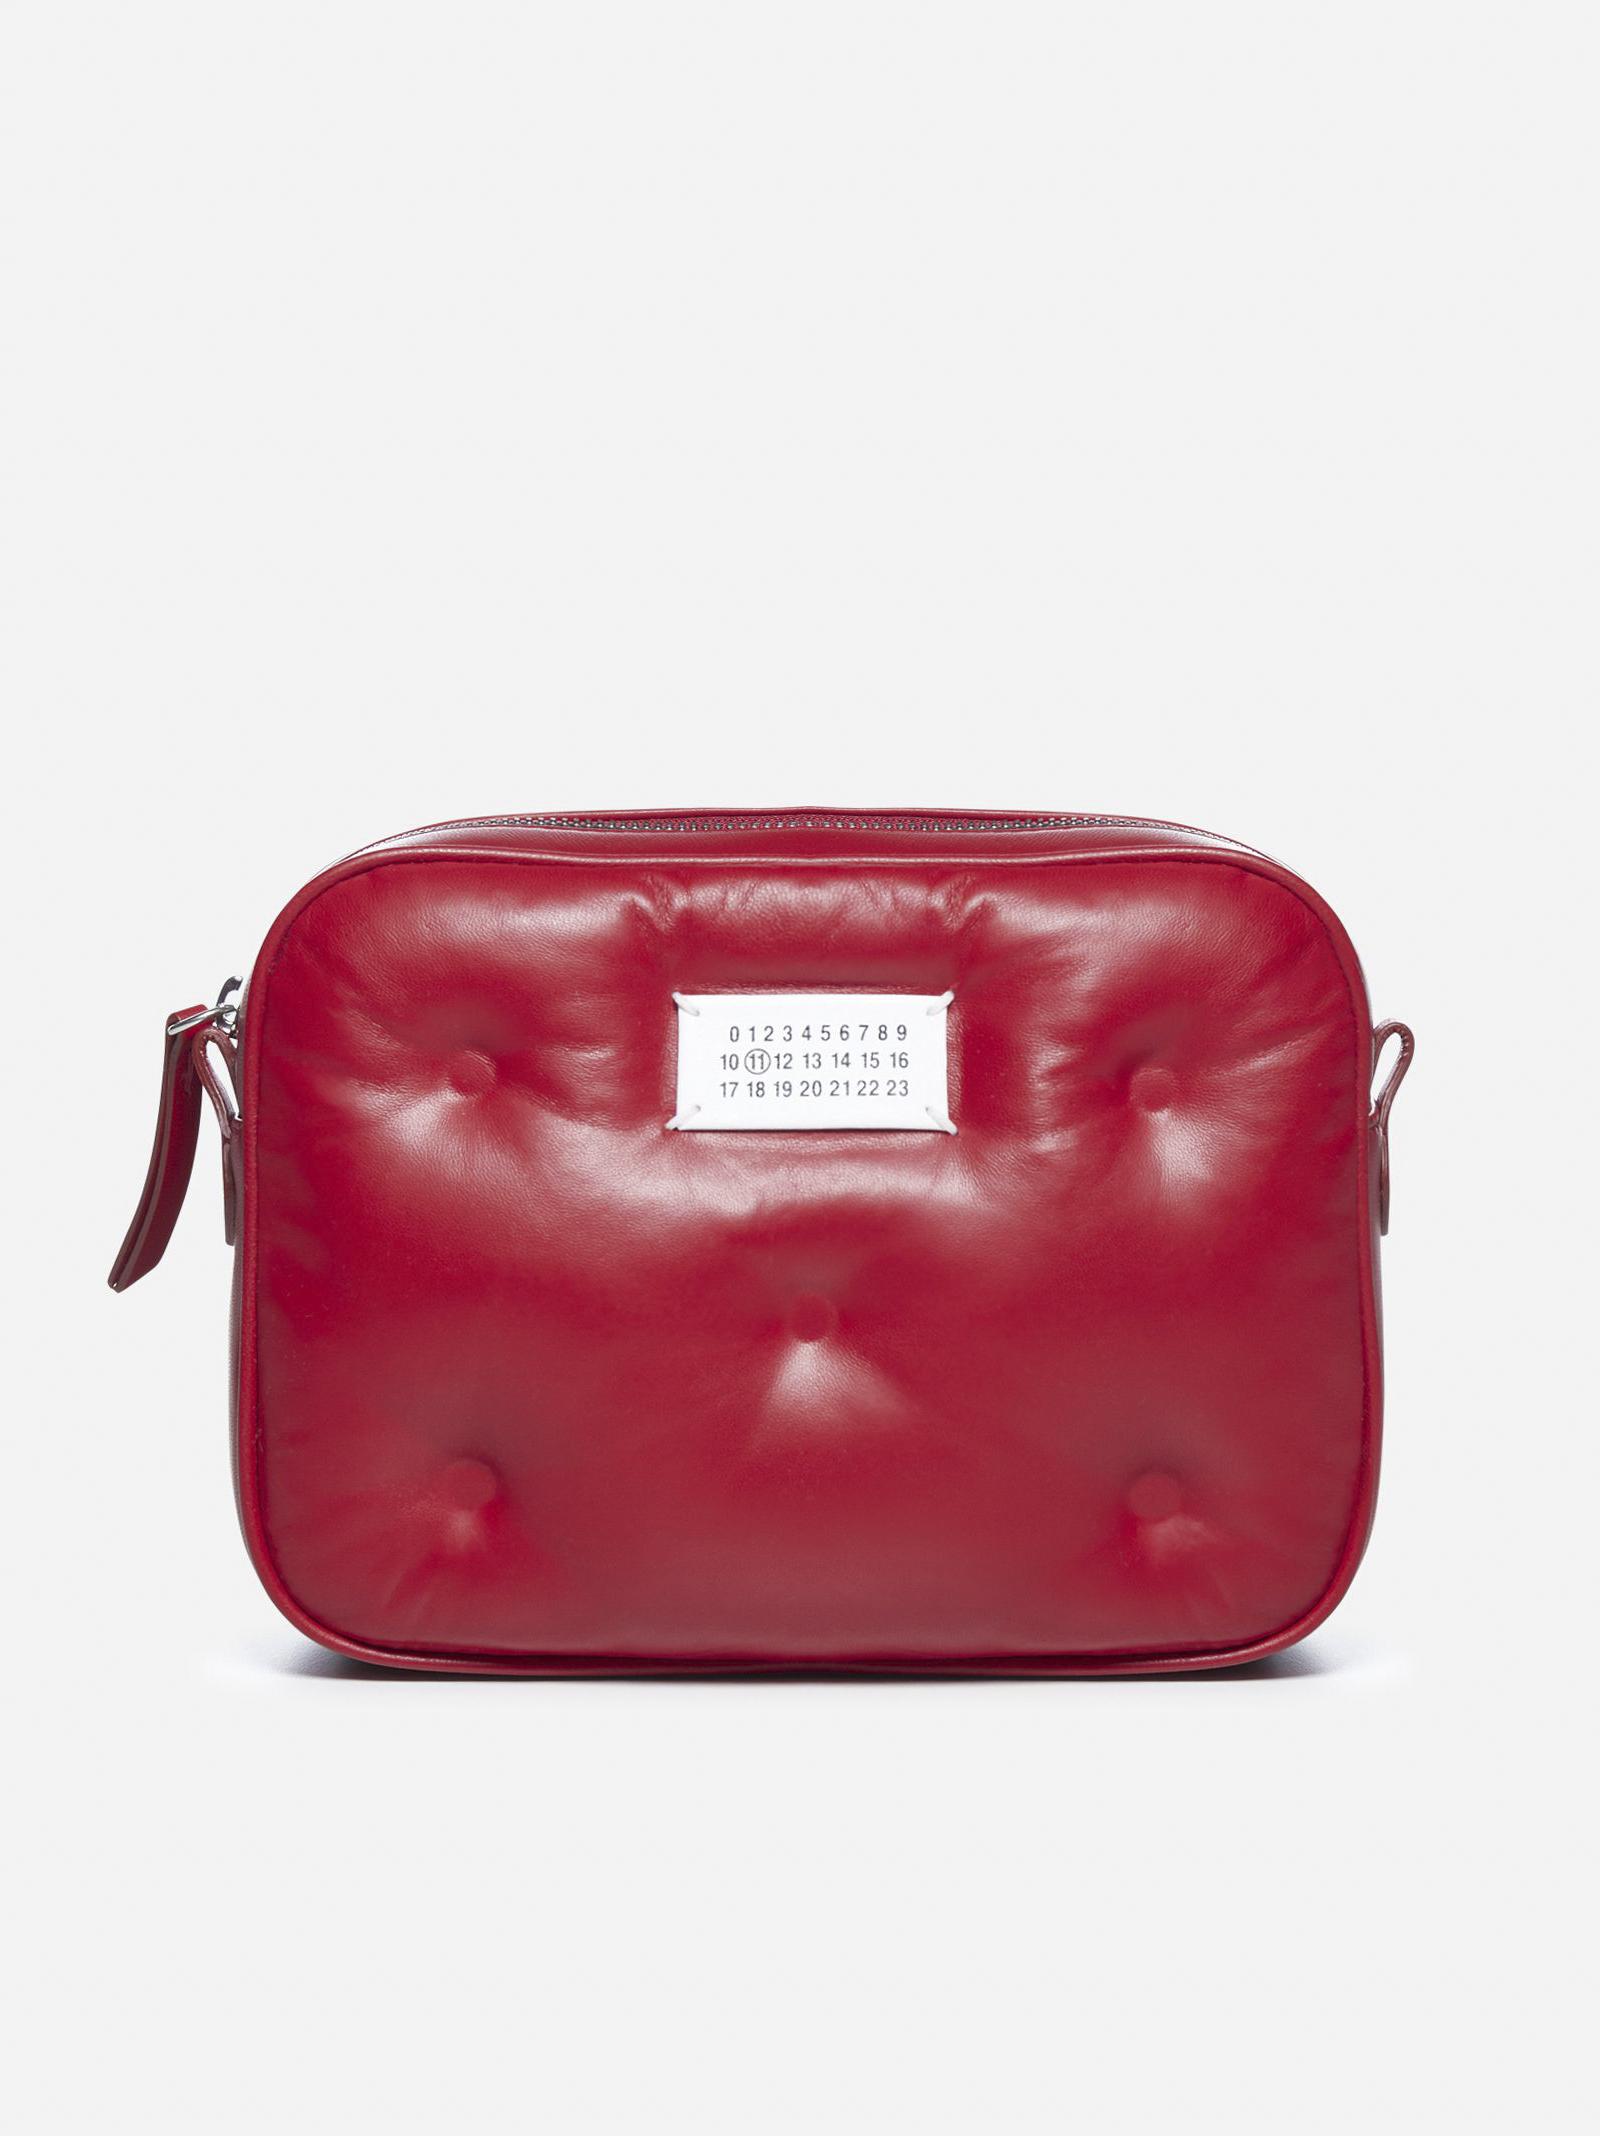 Maison Margiela Glam Slam Leather Crossbody Bag in Red - Lyst